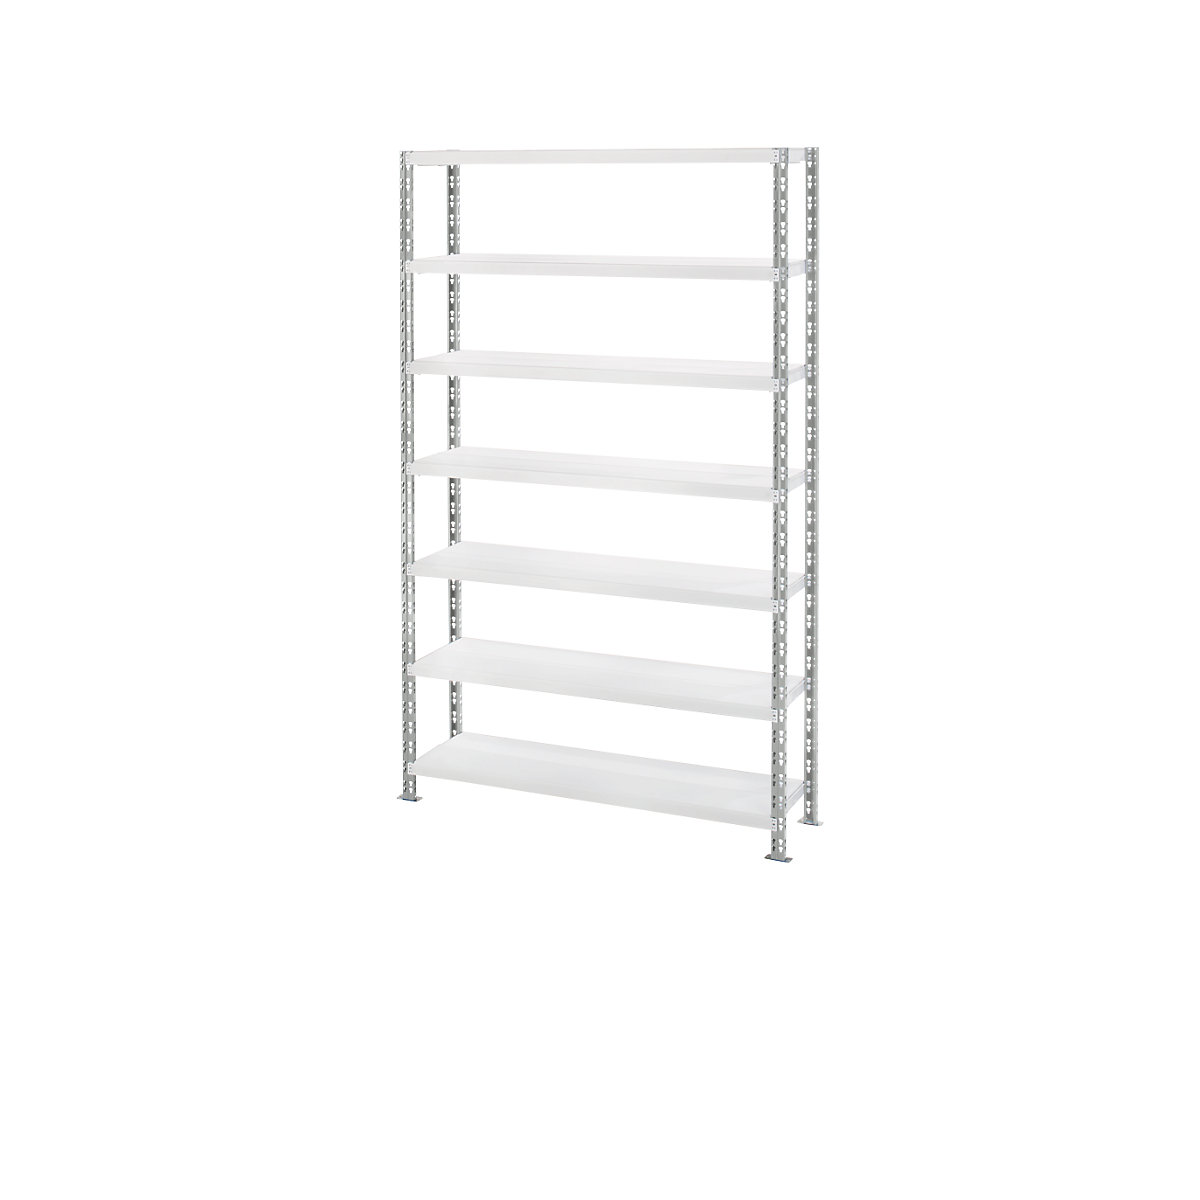 Wide span shelf unit with sheet steel shelves, depth 400 mm, standard shelf unit, HxW 2522 x 1550 mm